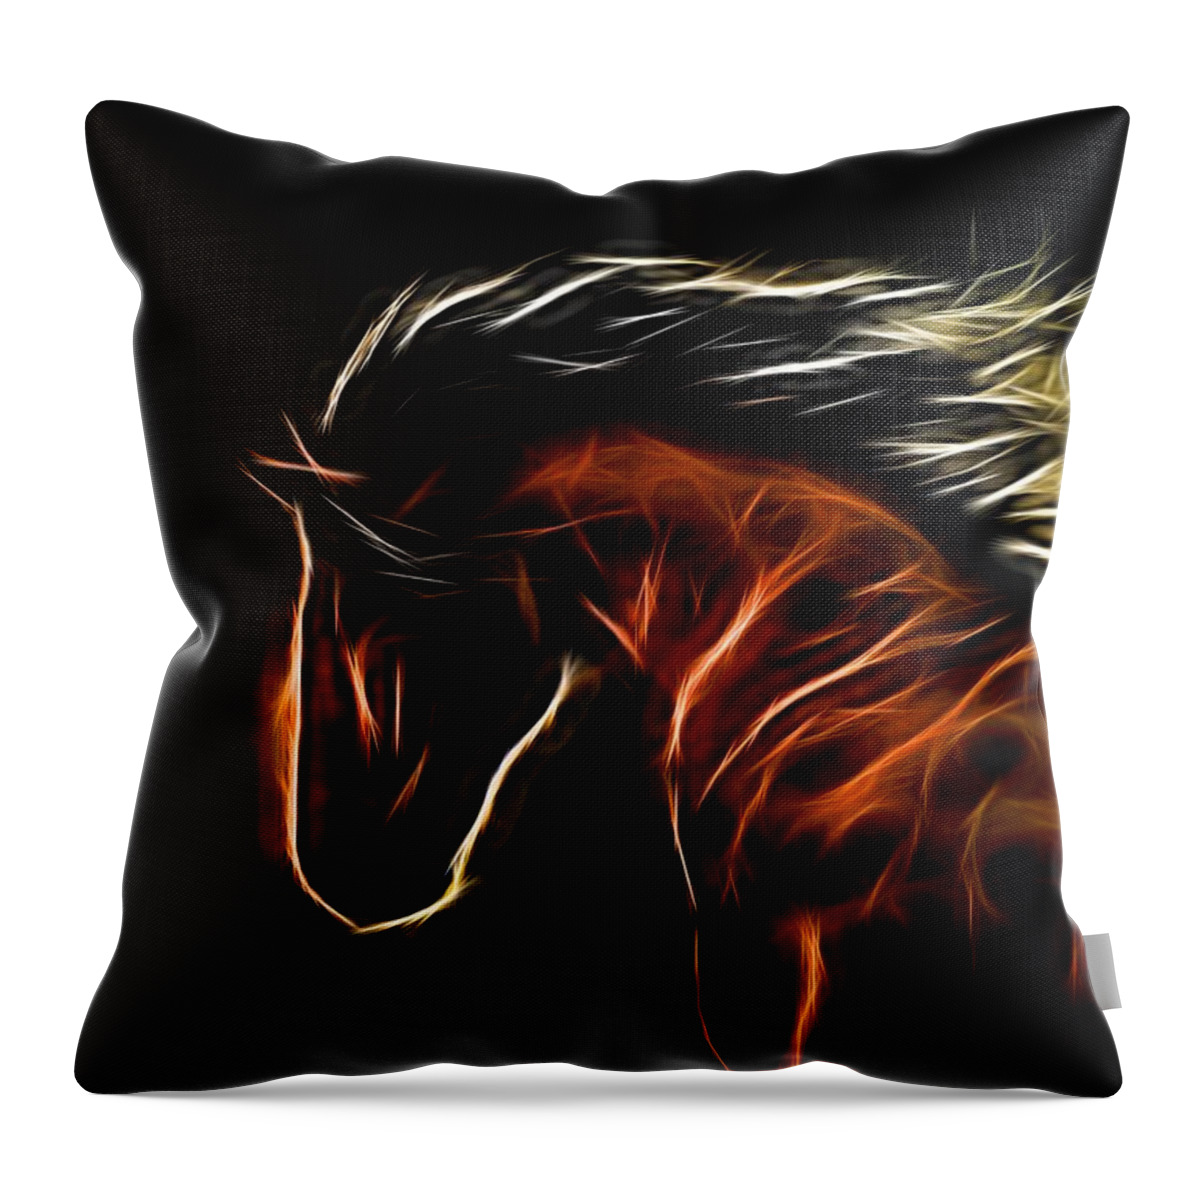 Horse Throw Pillow featuring the digital art Glowing Horse by Daniel Eskridge